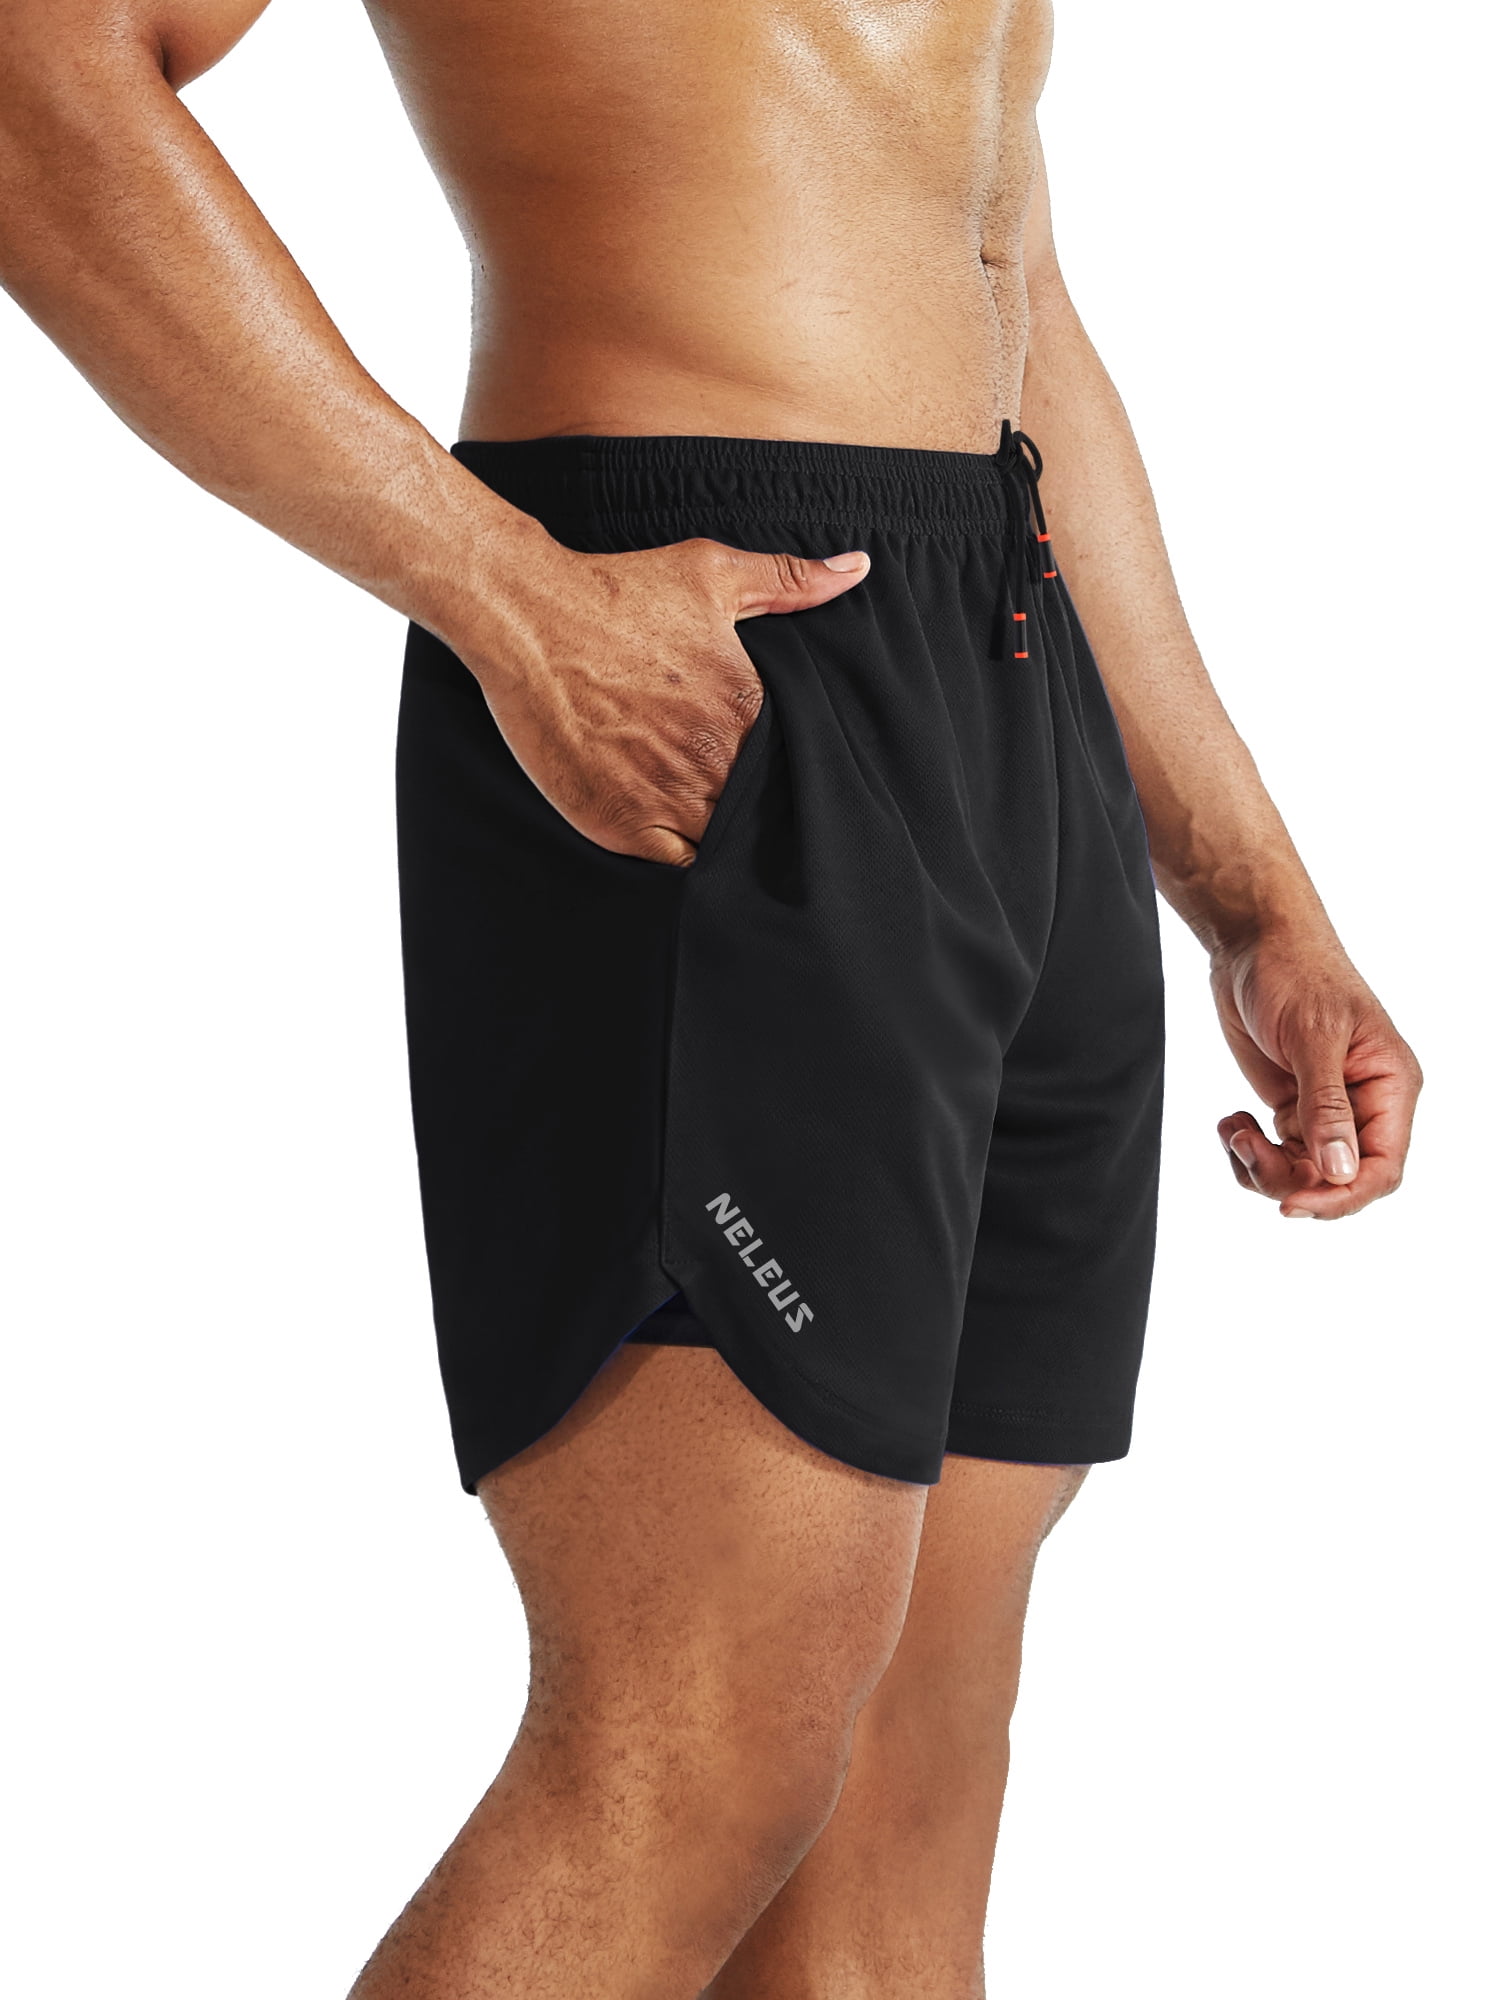 Neleus Men's 7 Mesh Running Workout Shorts with Pockets 